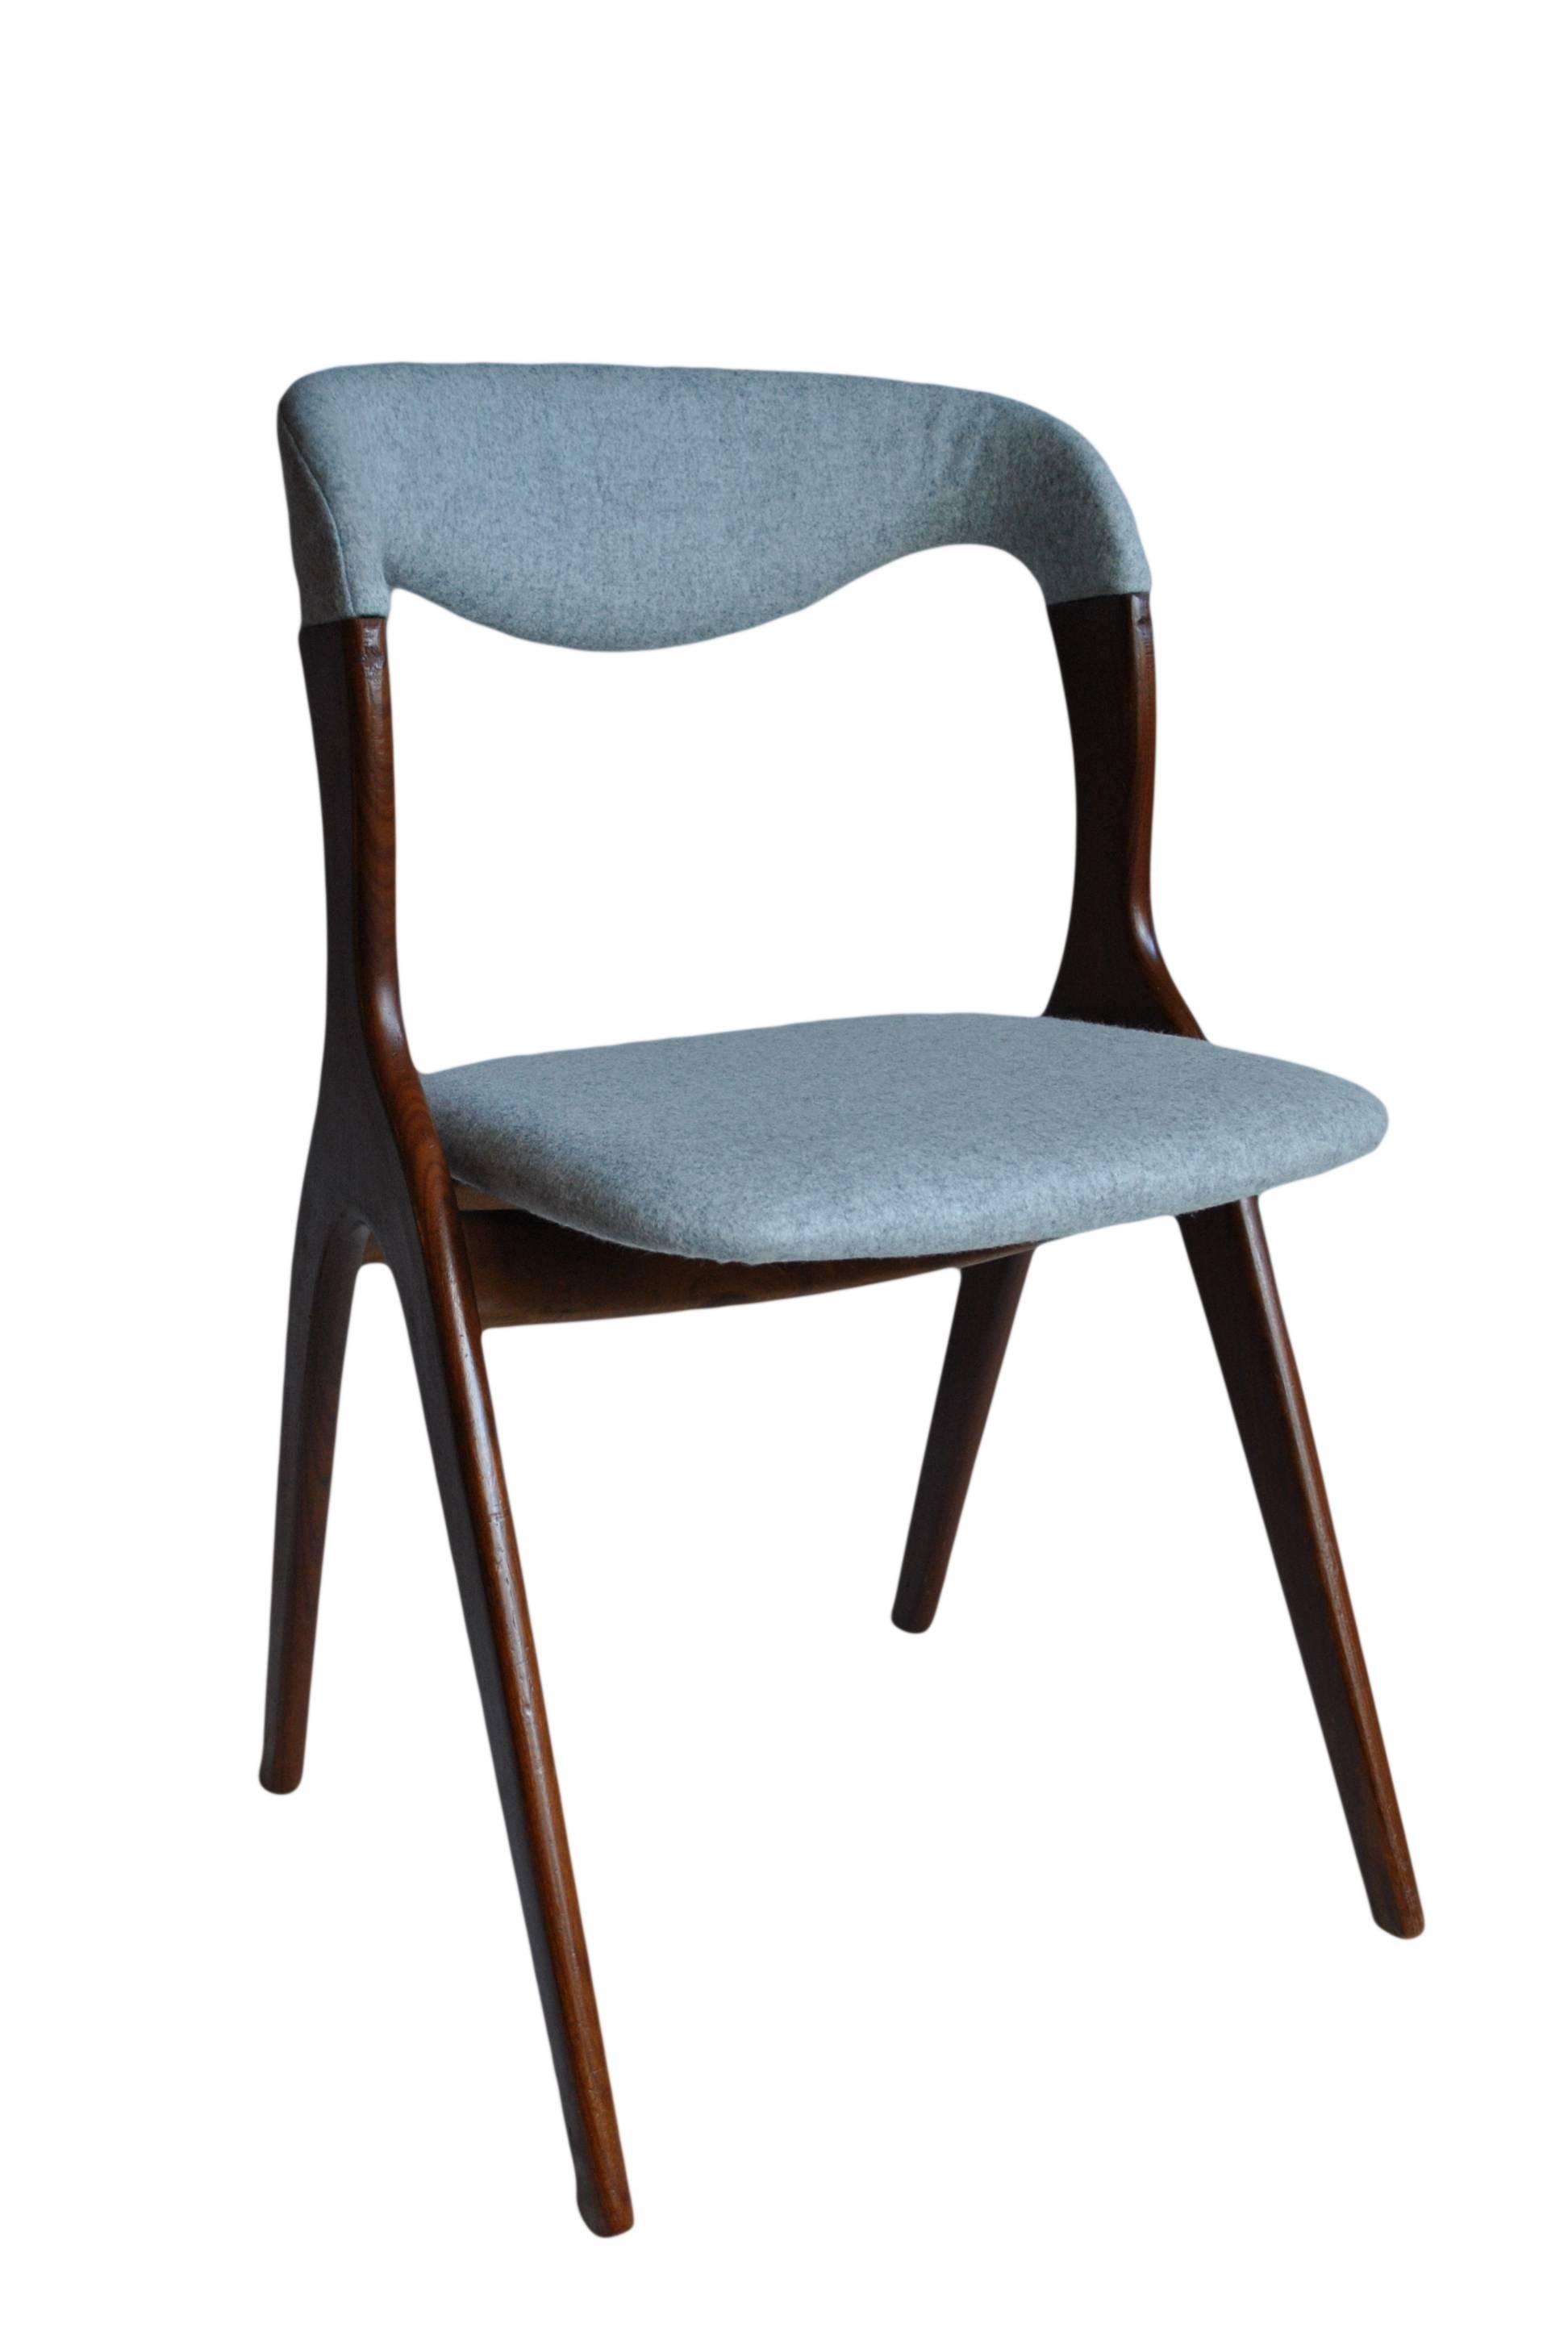 20th Century Danish Midcentury Dining Chairs, set of eight. Restored.